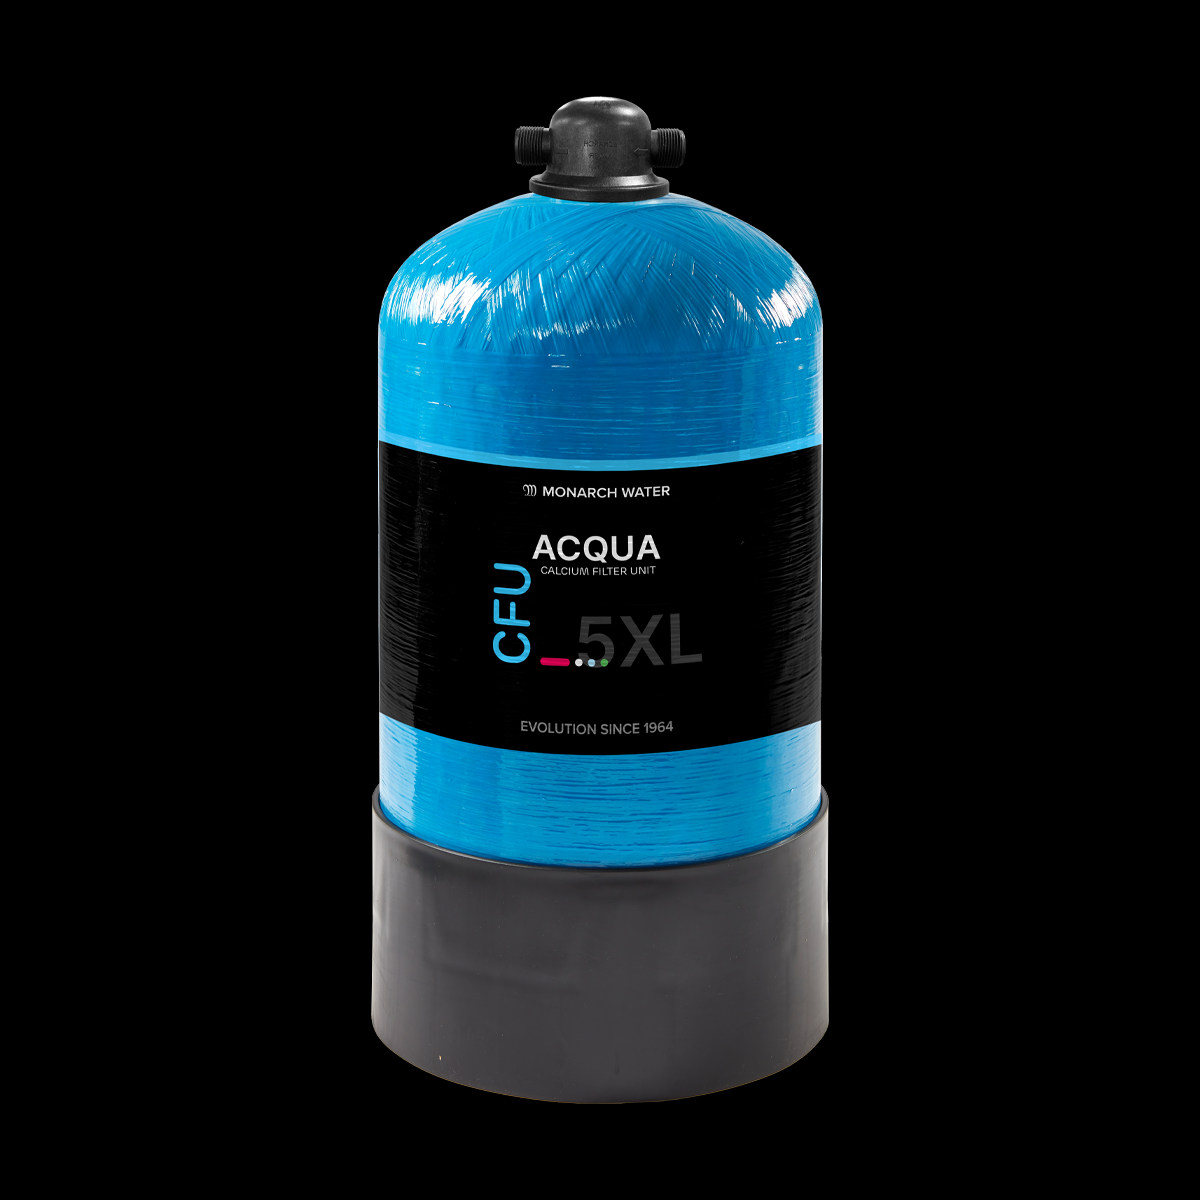 Calcium Filter Unit ACQUA 5XL by Monarch Water.